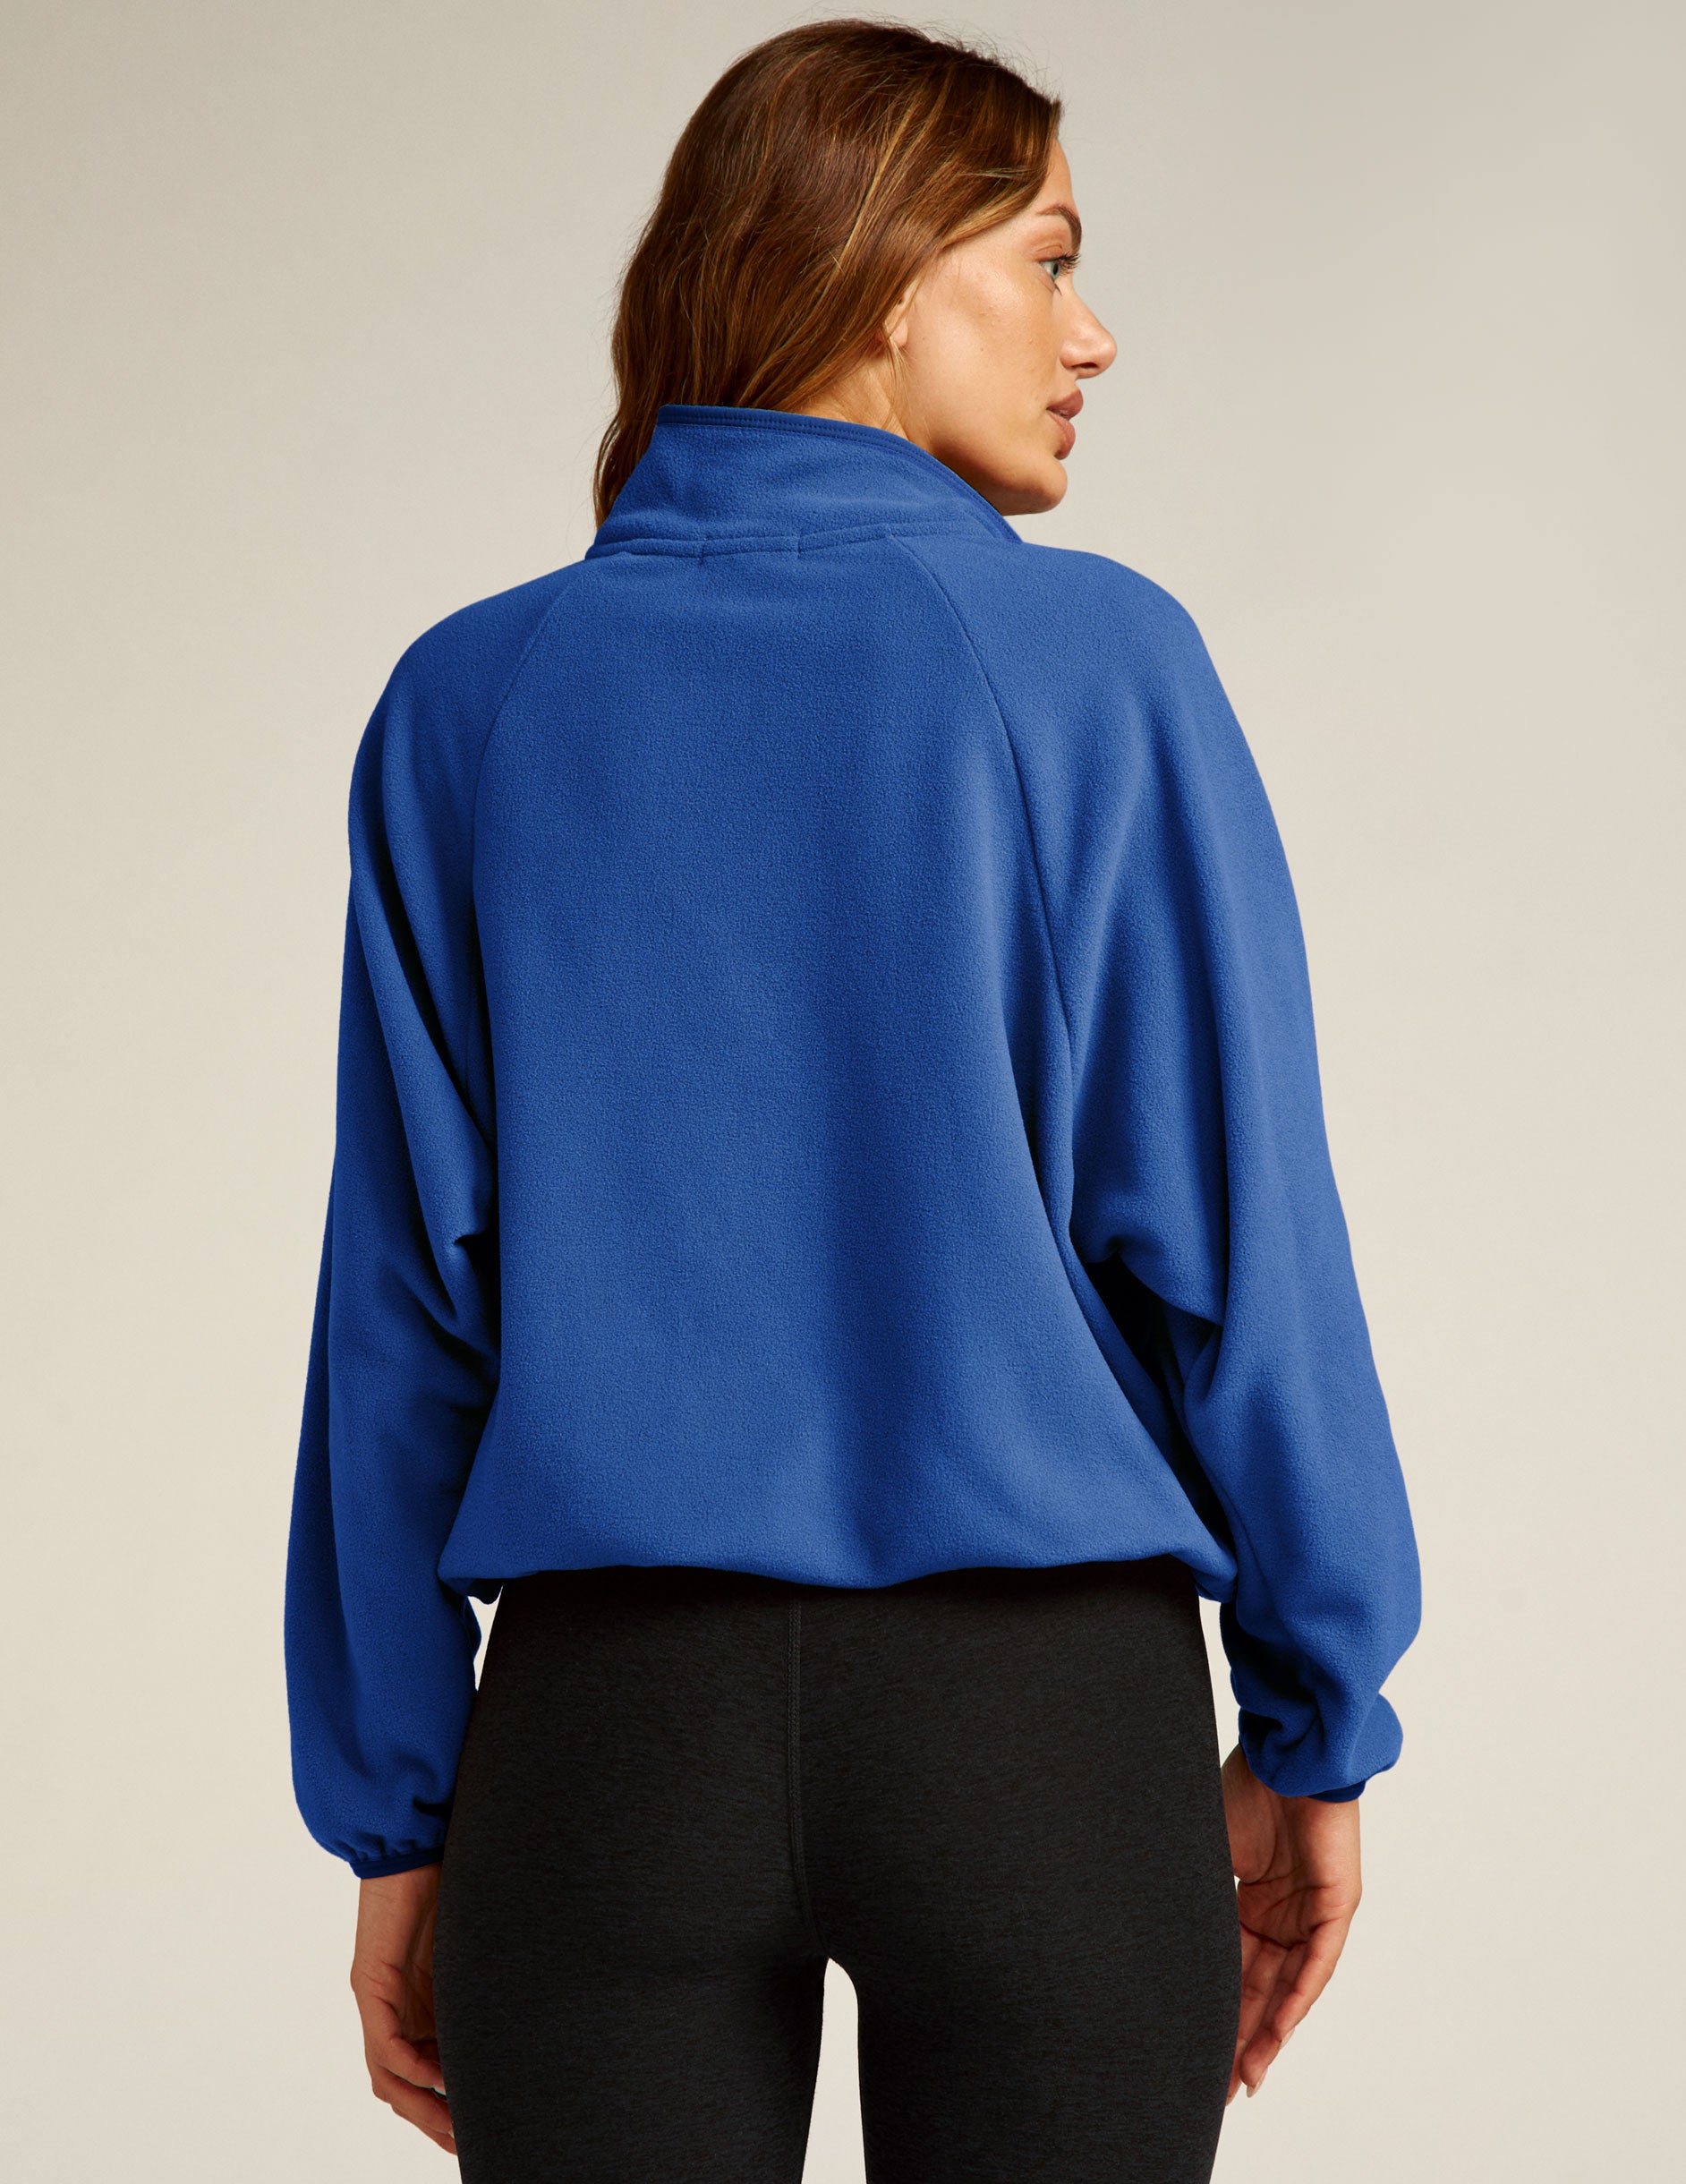 blue quarter button fleece pullover with a kangaroo front pocket. 